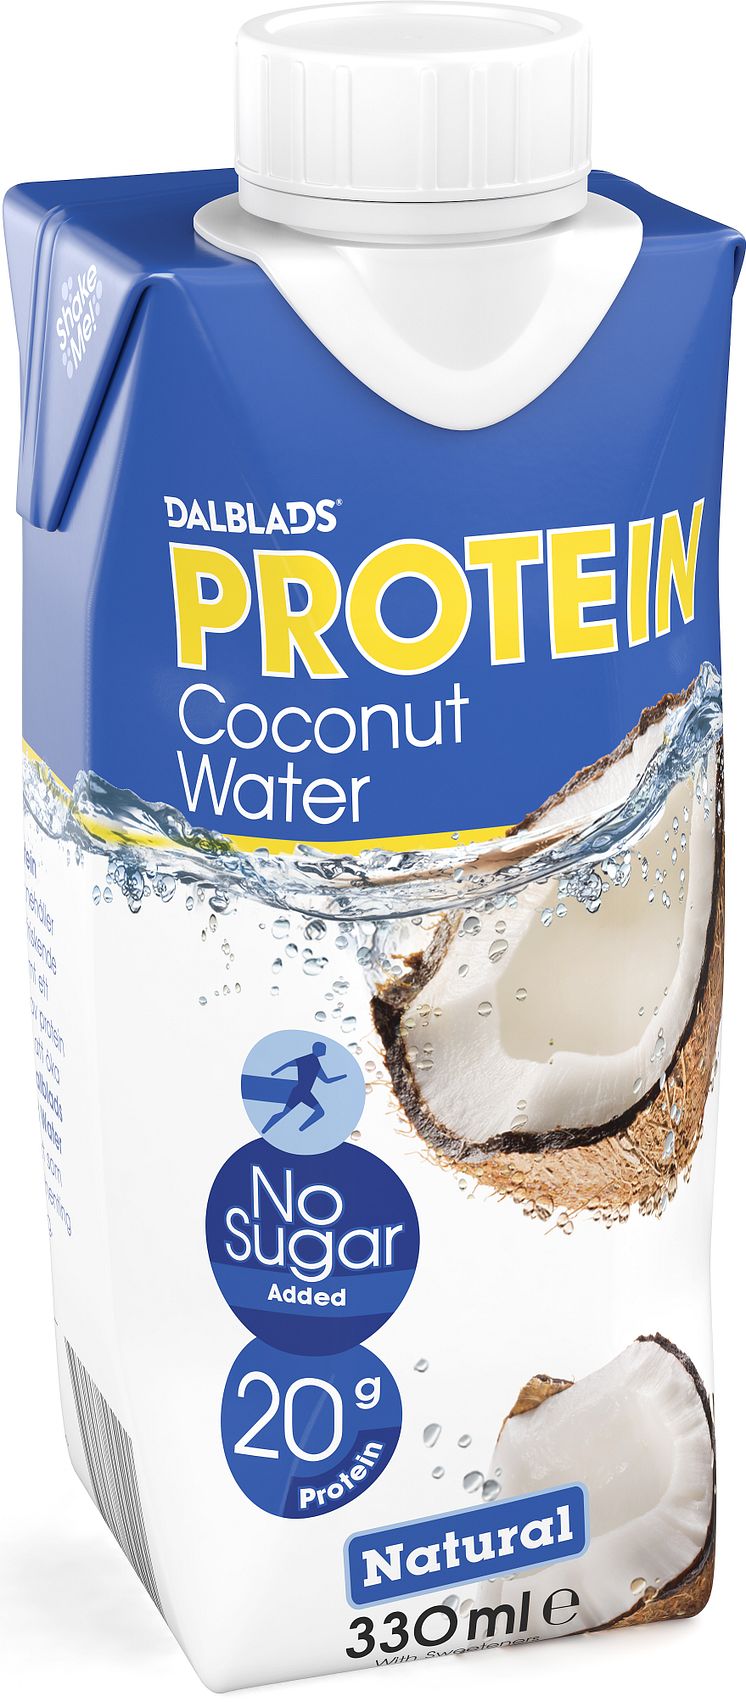 Dalblads Coconut Water Natural